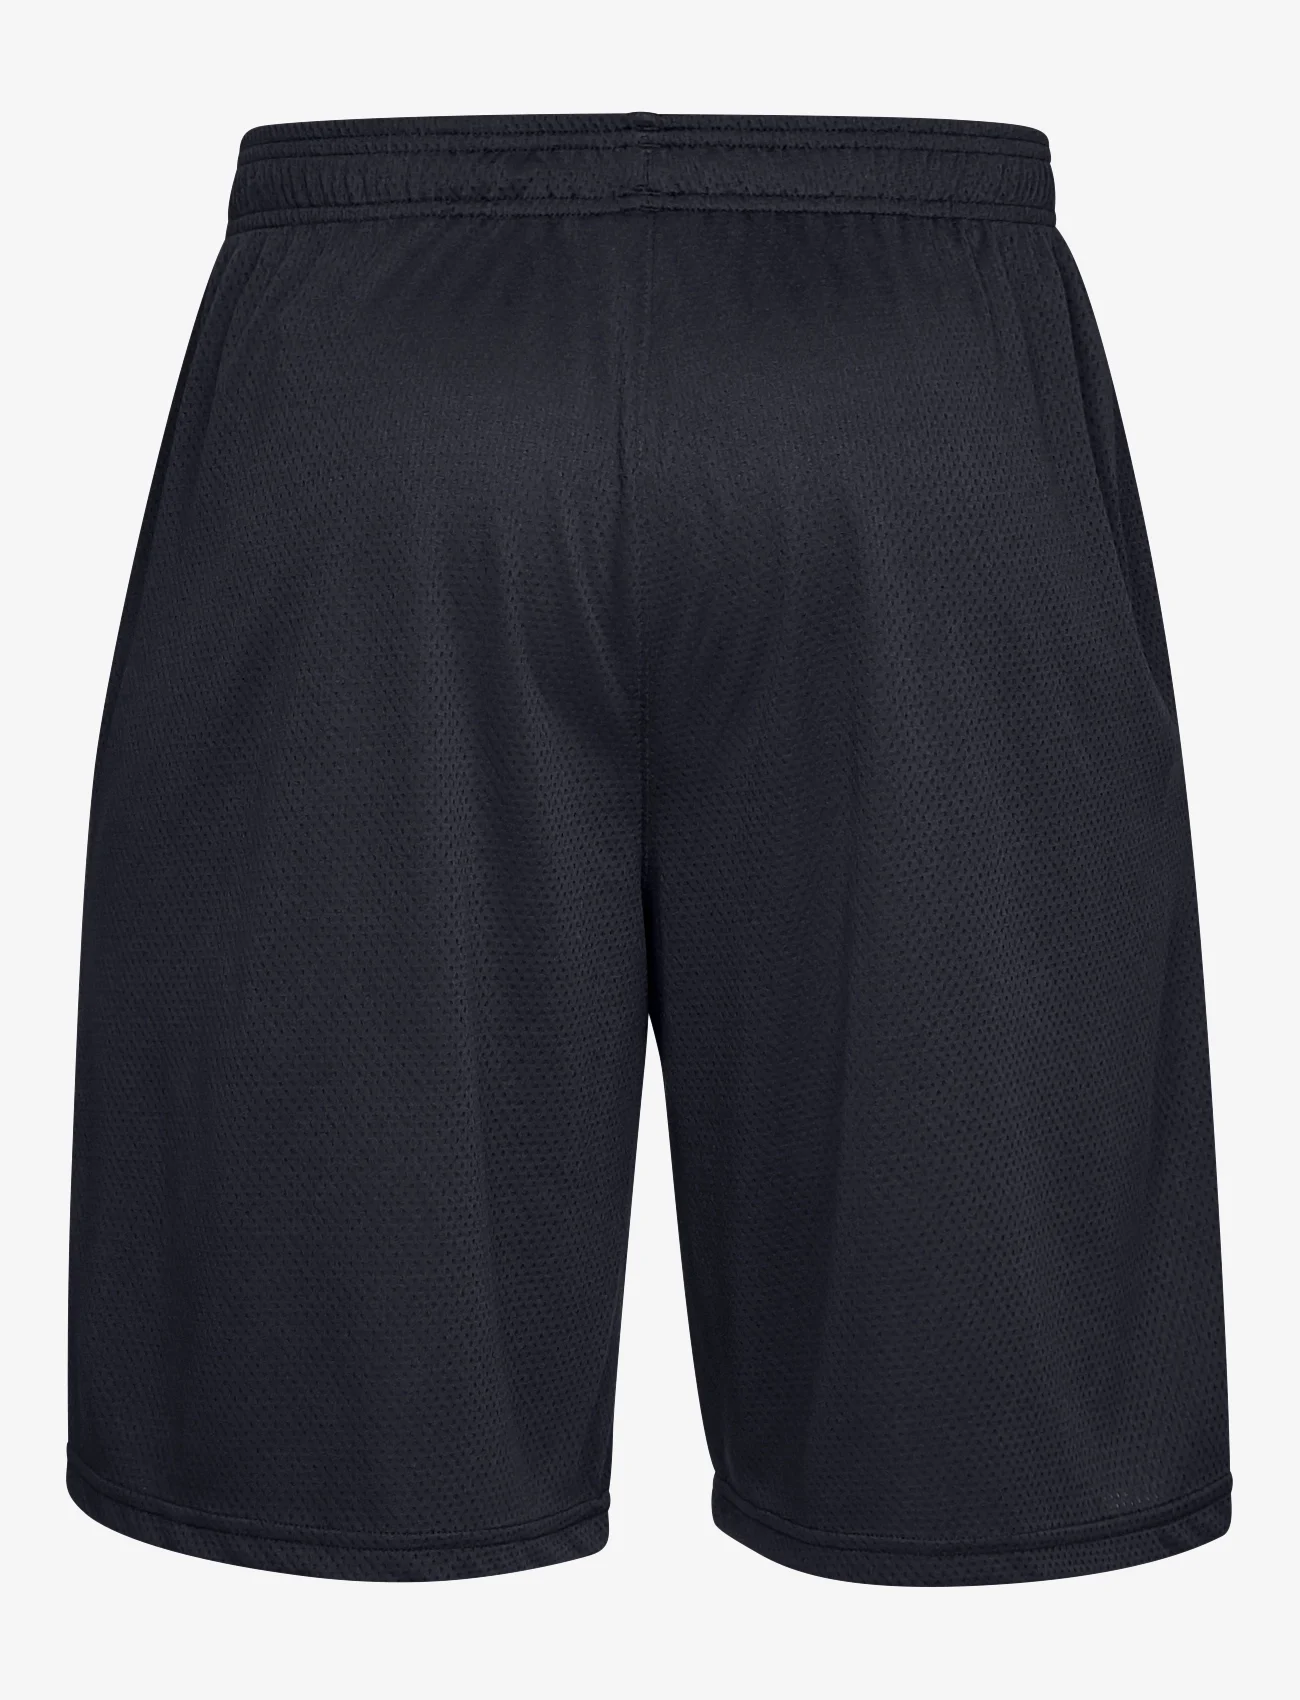 Under Armour - UA Tech Mesh Shorts - sportsshorts - black - 1